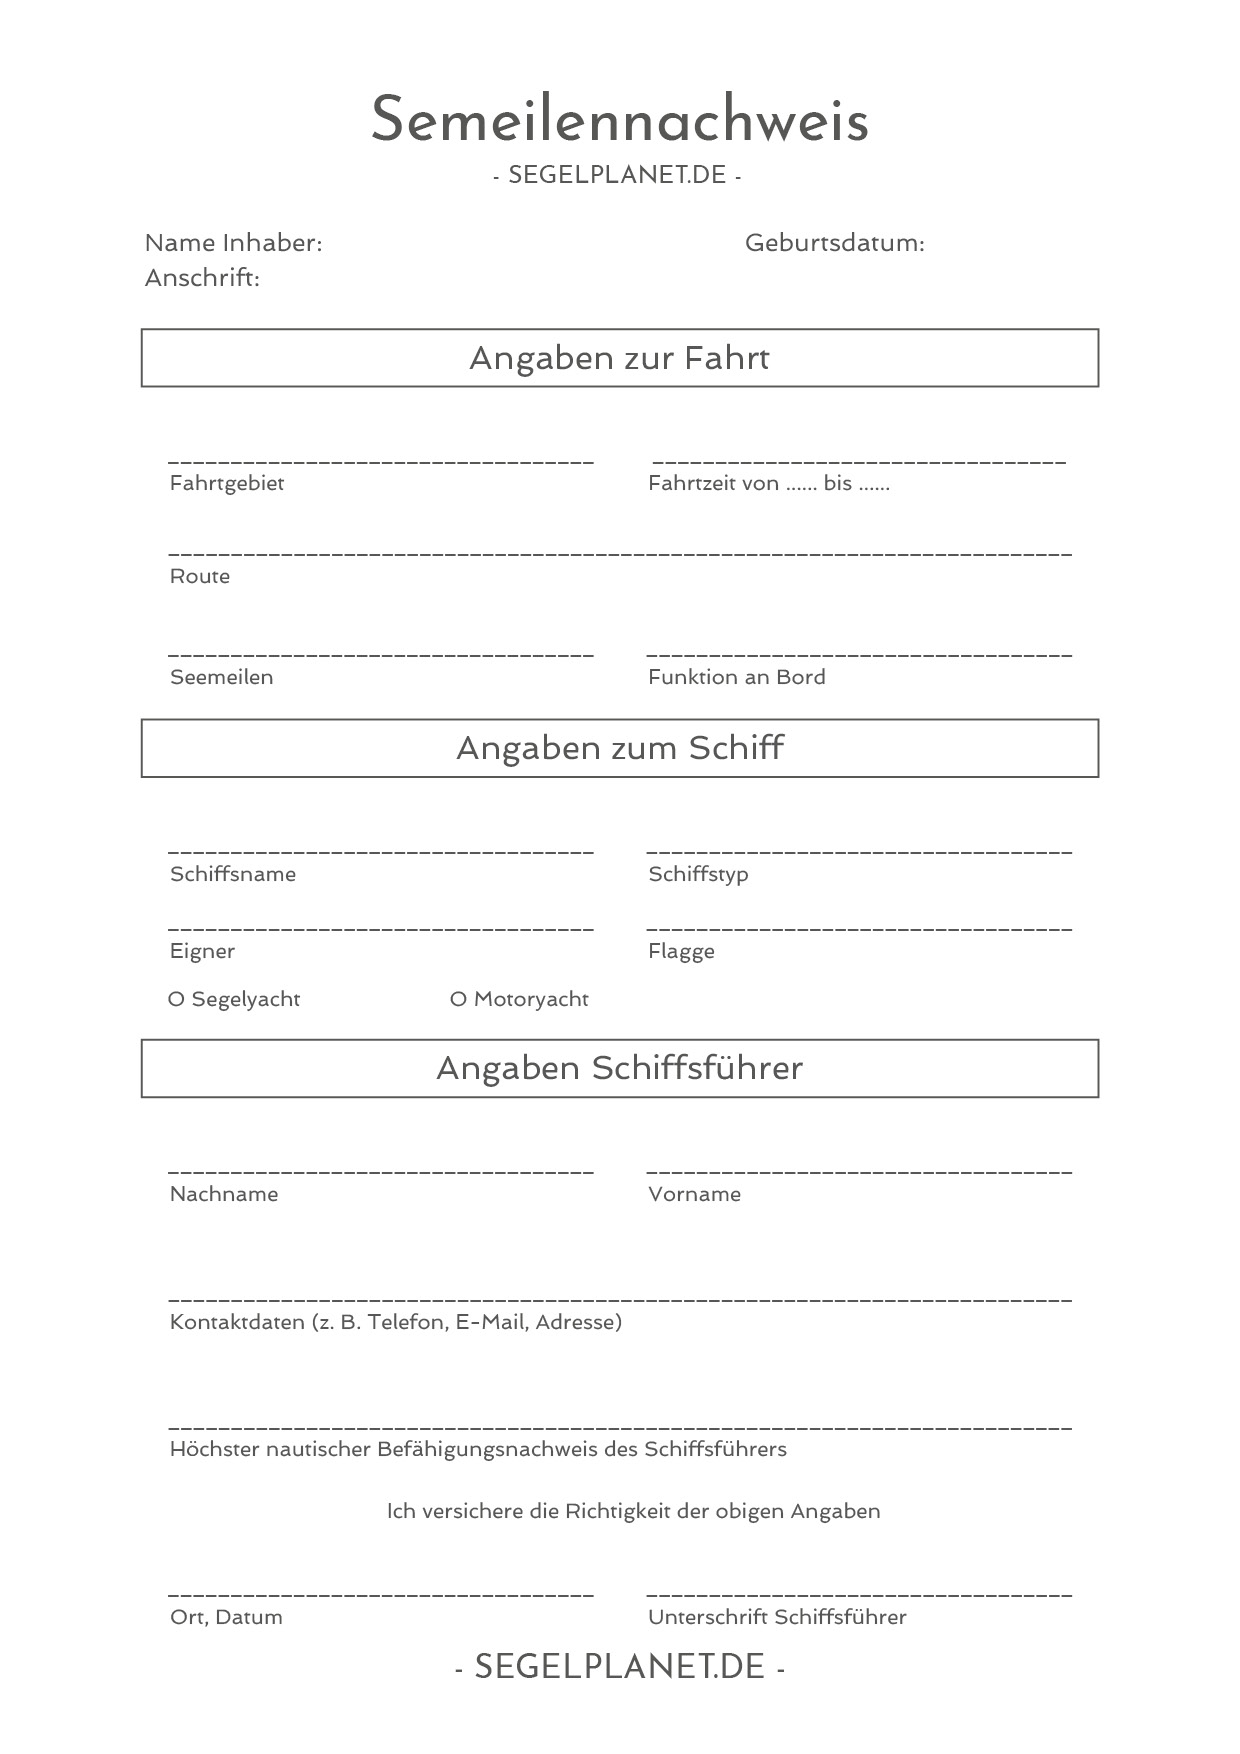 Seemeilennachweis PDF Download Segelplanet.de